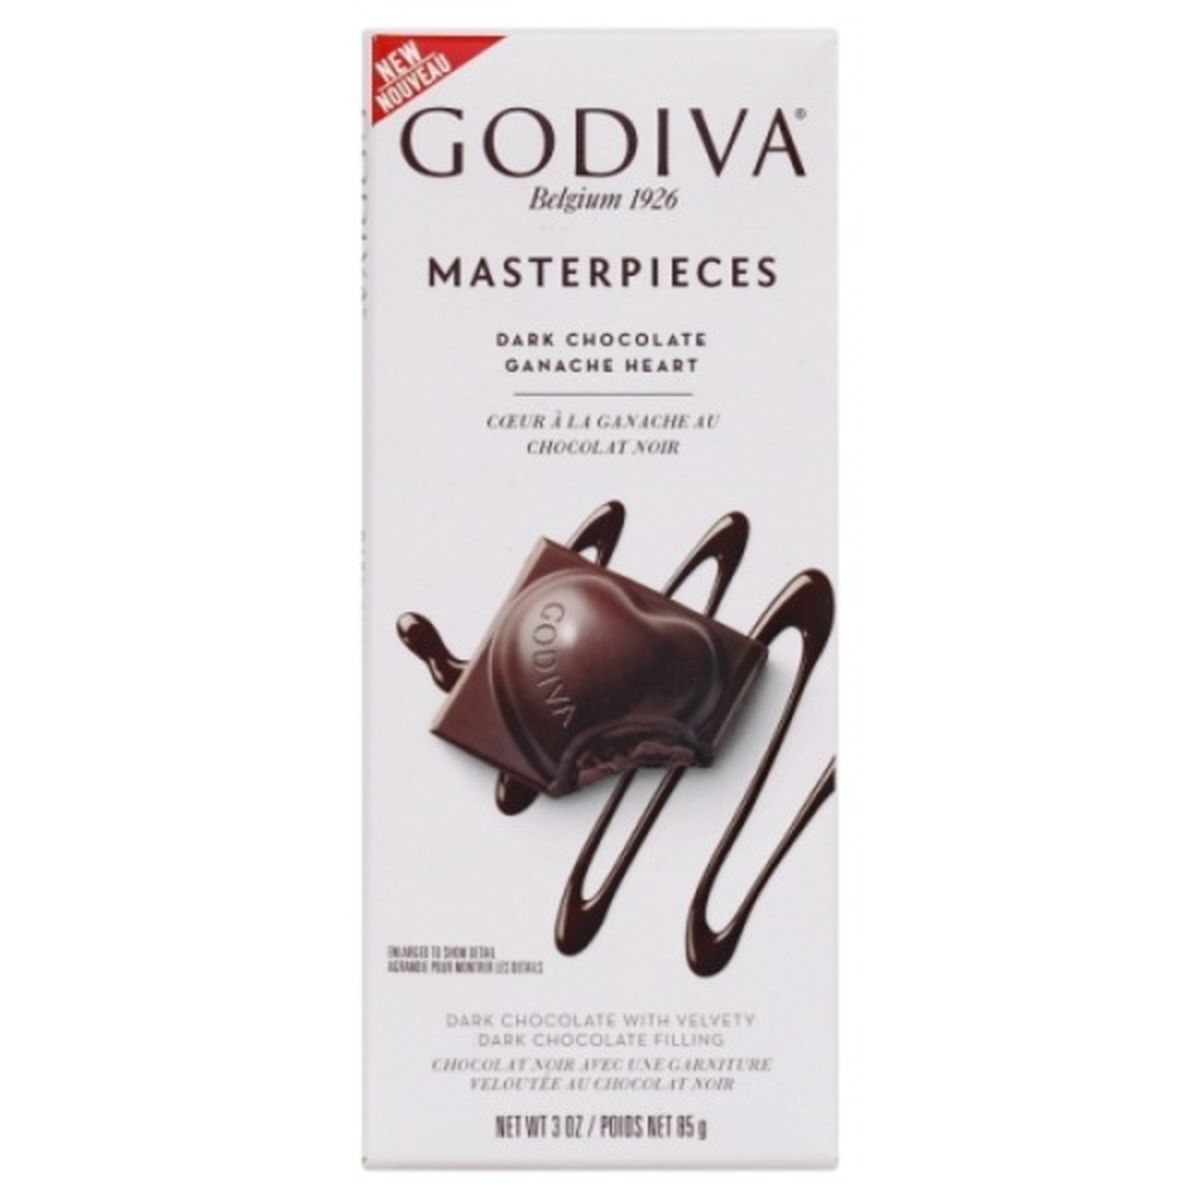 Calories in Godiva Masterpieces Dark Chocolate, Ganache Heart